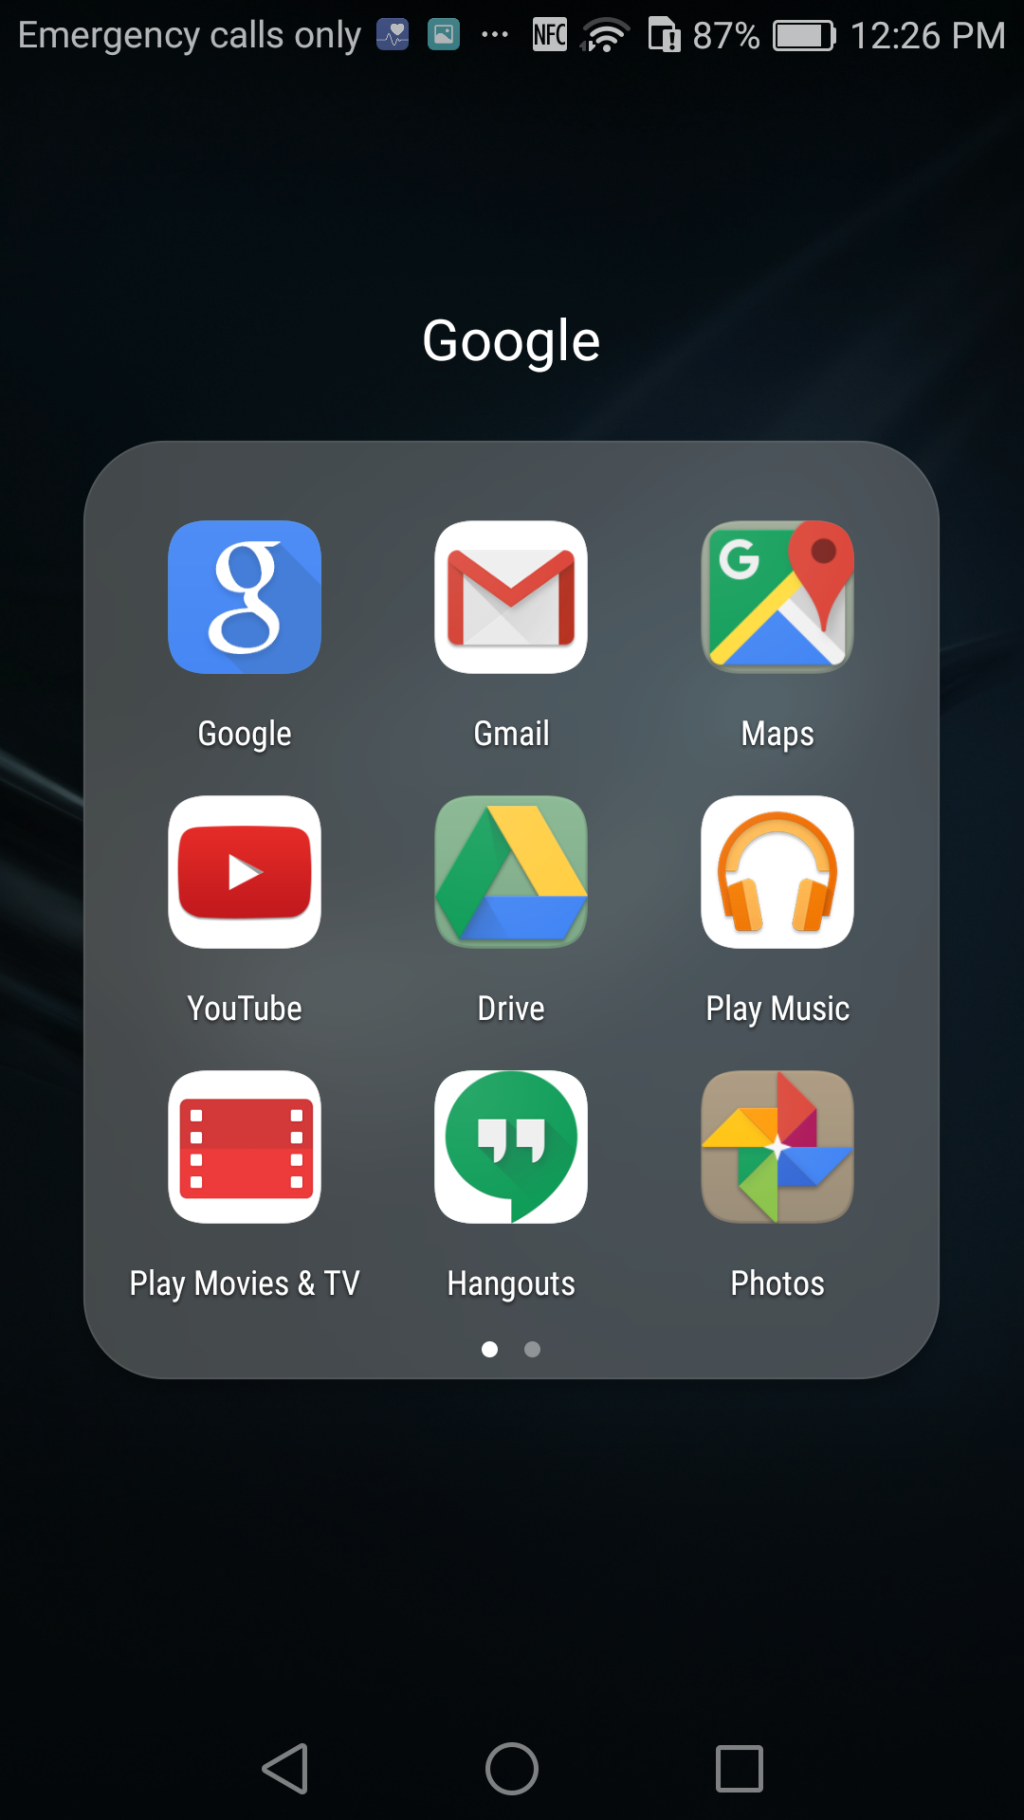 huawei p9 user interface UI google apps